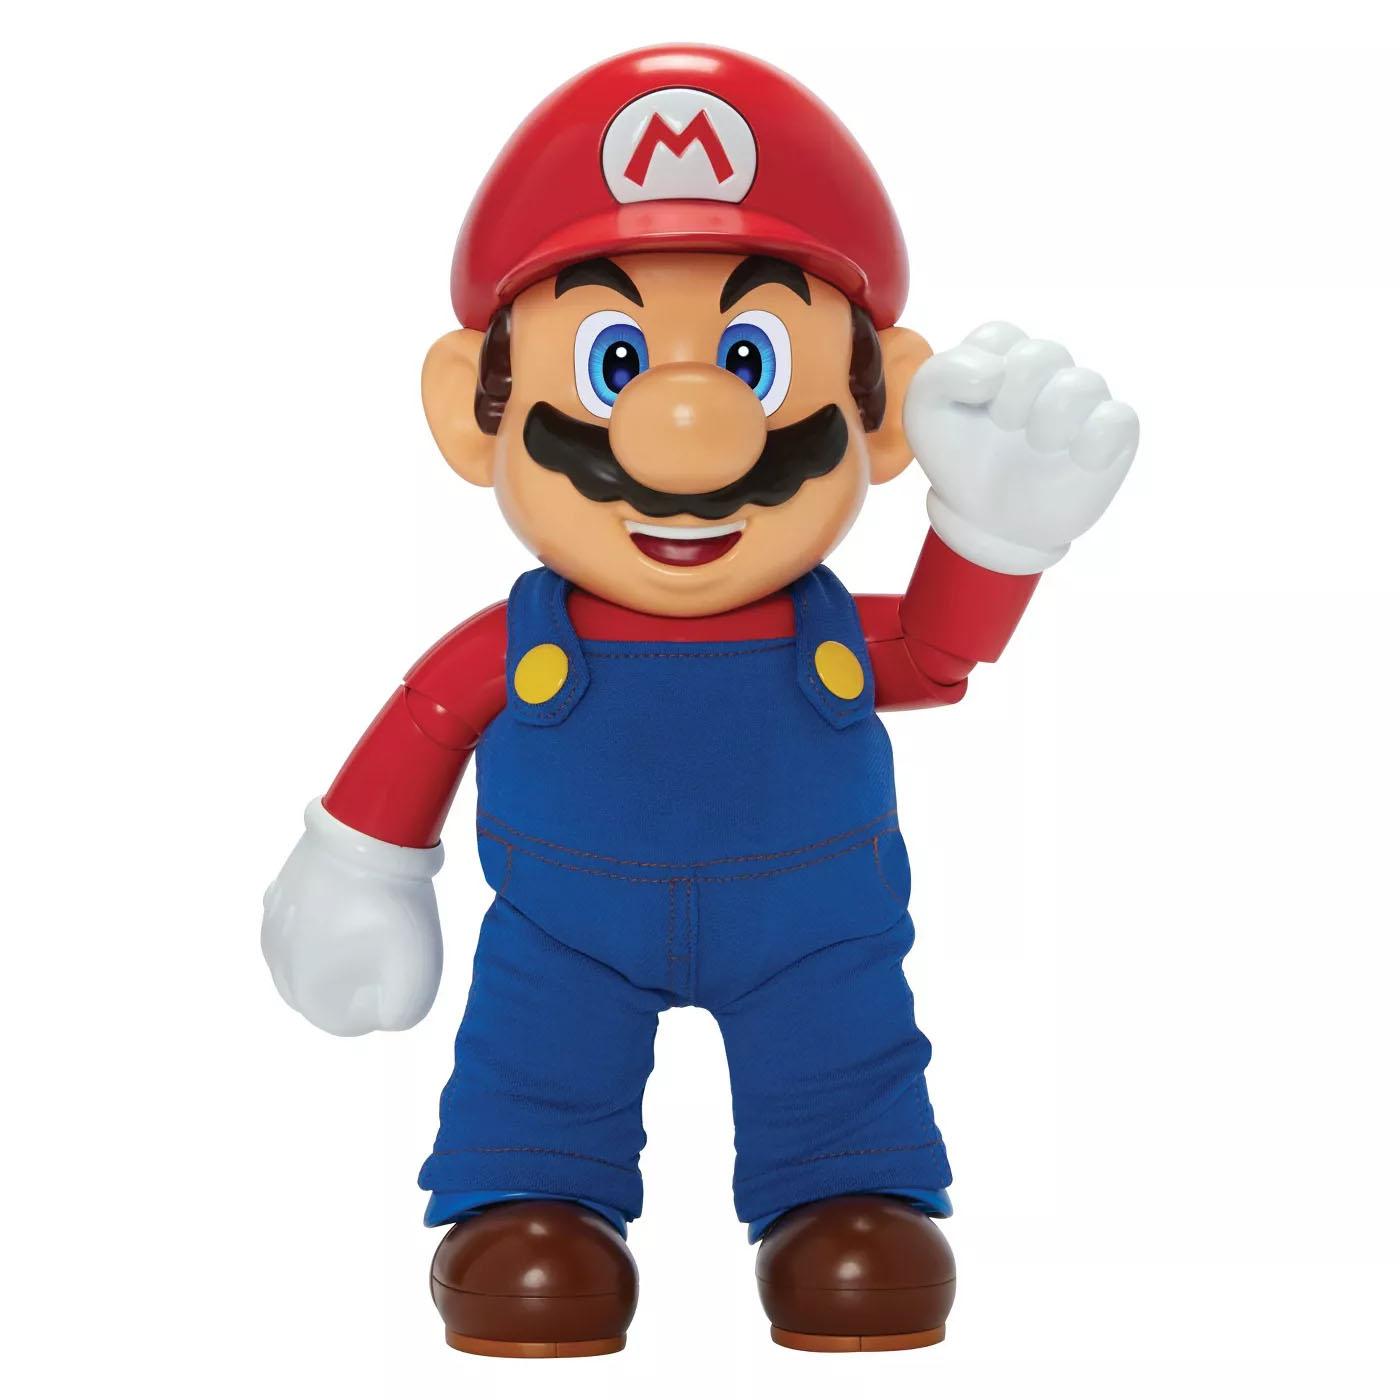 12in Super Mario Bros Its a Me Mario Action Figure for $24.99